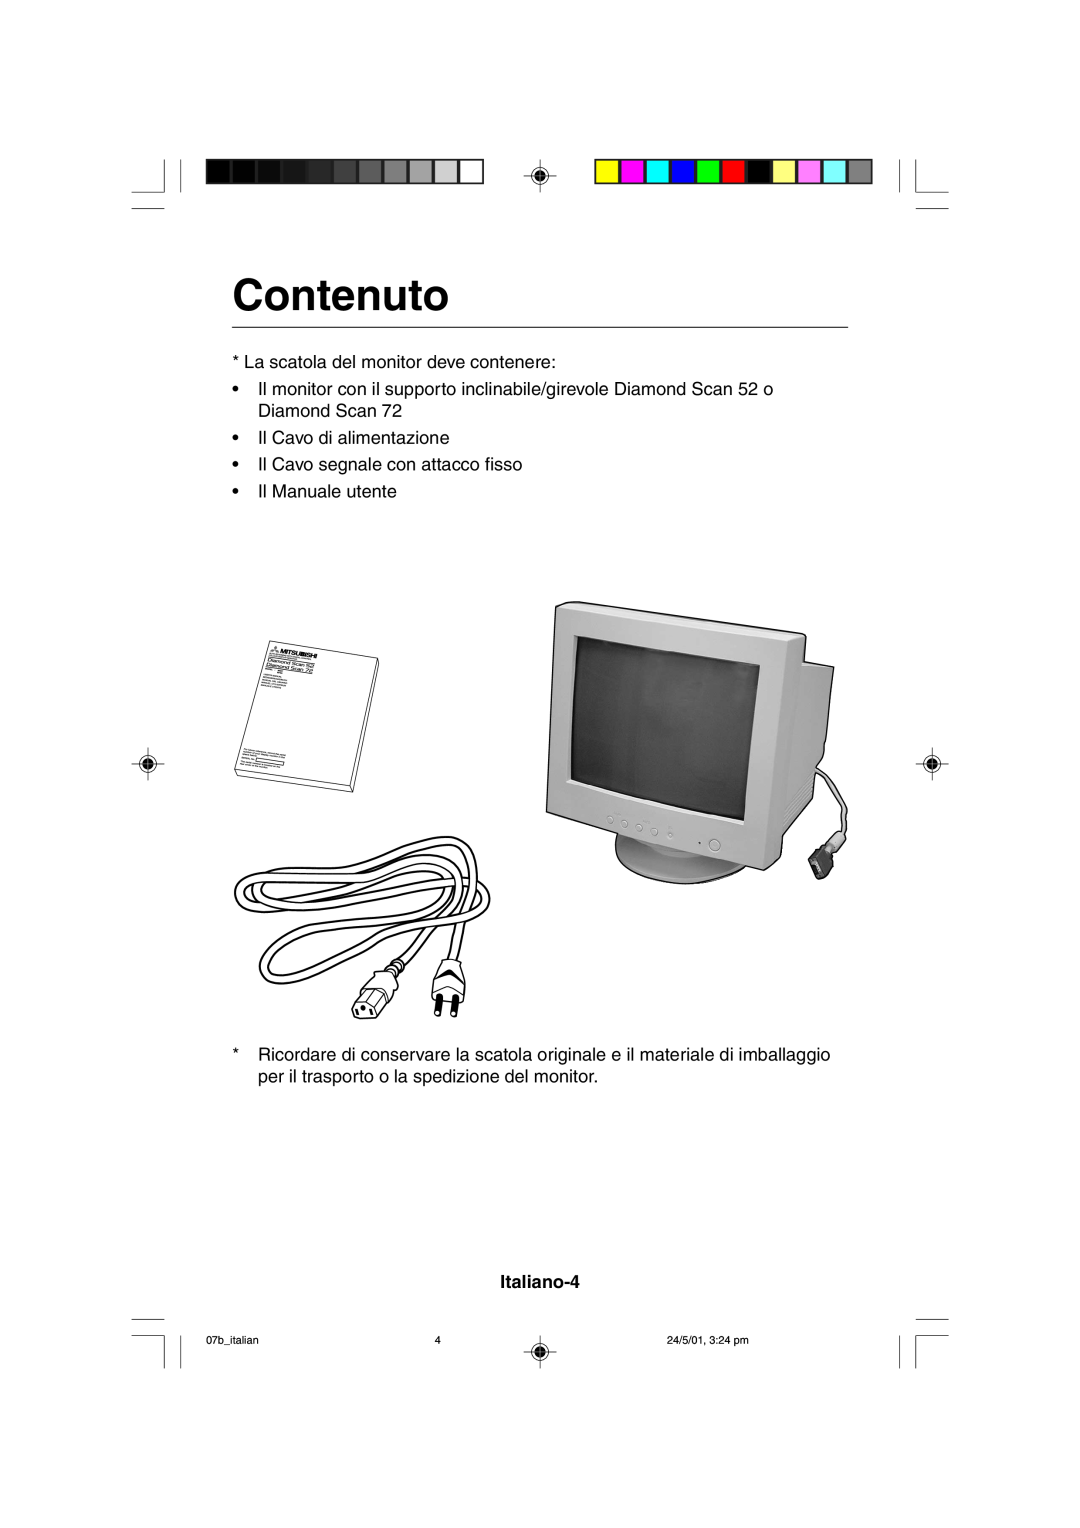 Mitsubishi Electronics M557 user manual Contenuto, Italiano-4, 07bitalian, 24/5/01, 324 pm 